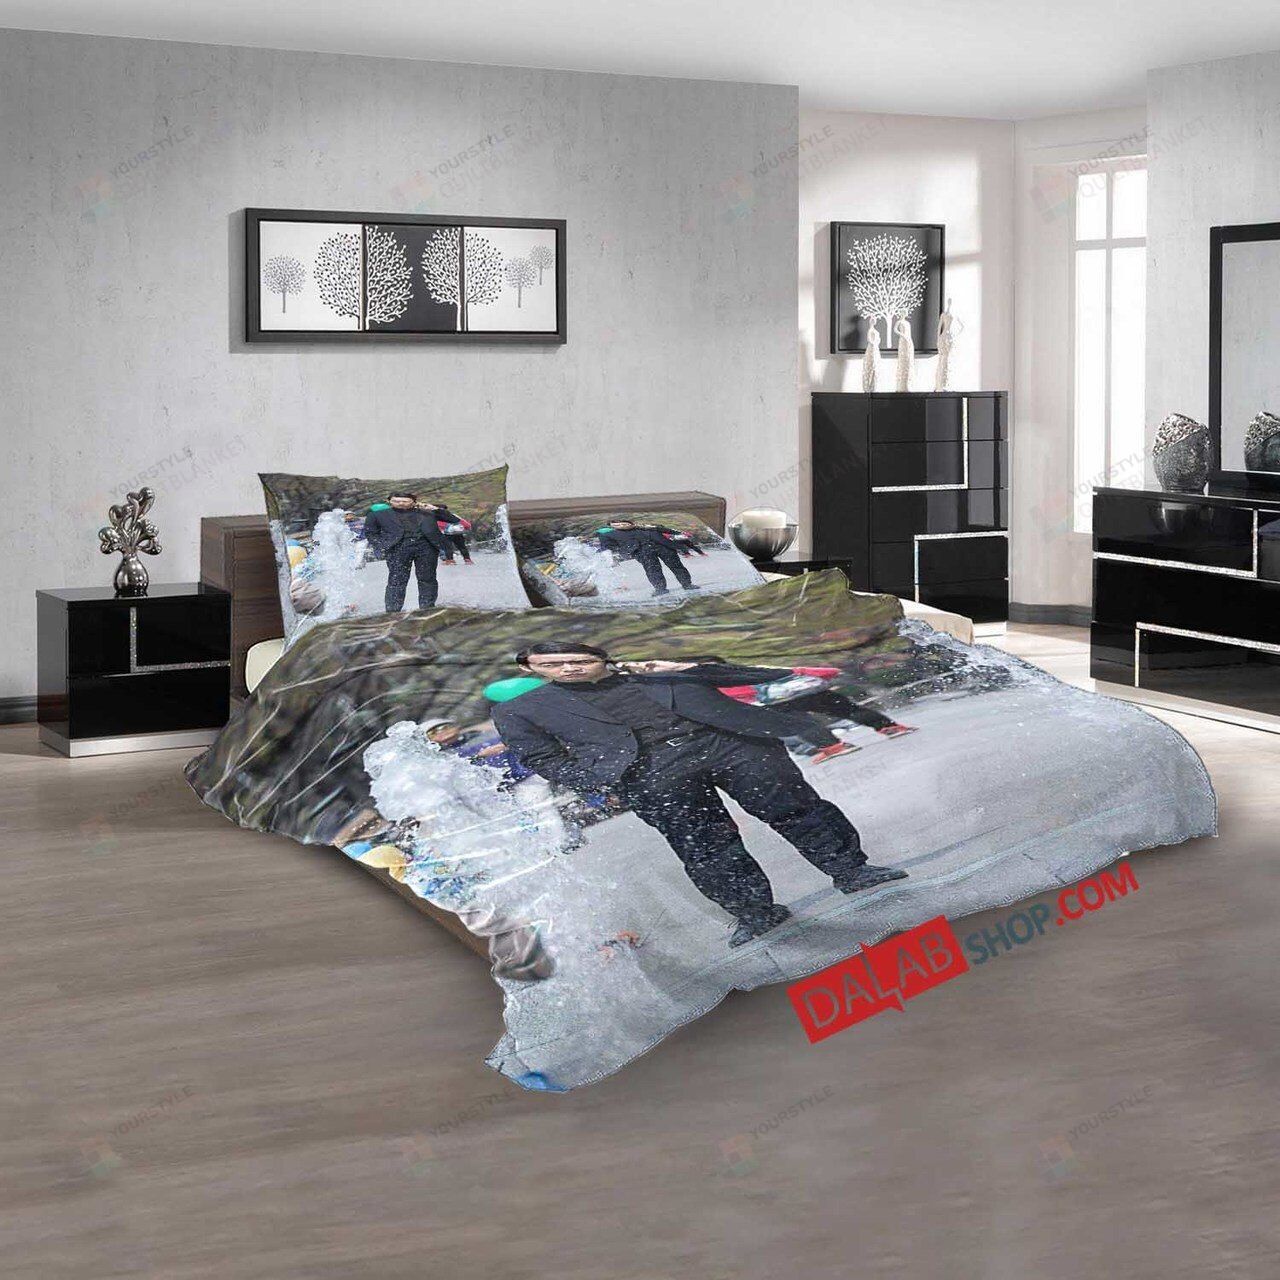 Movie Lucid Dream D 3d Customized Duvet Cover Bedroom Sets Bedding Sets